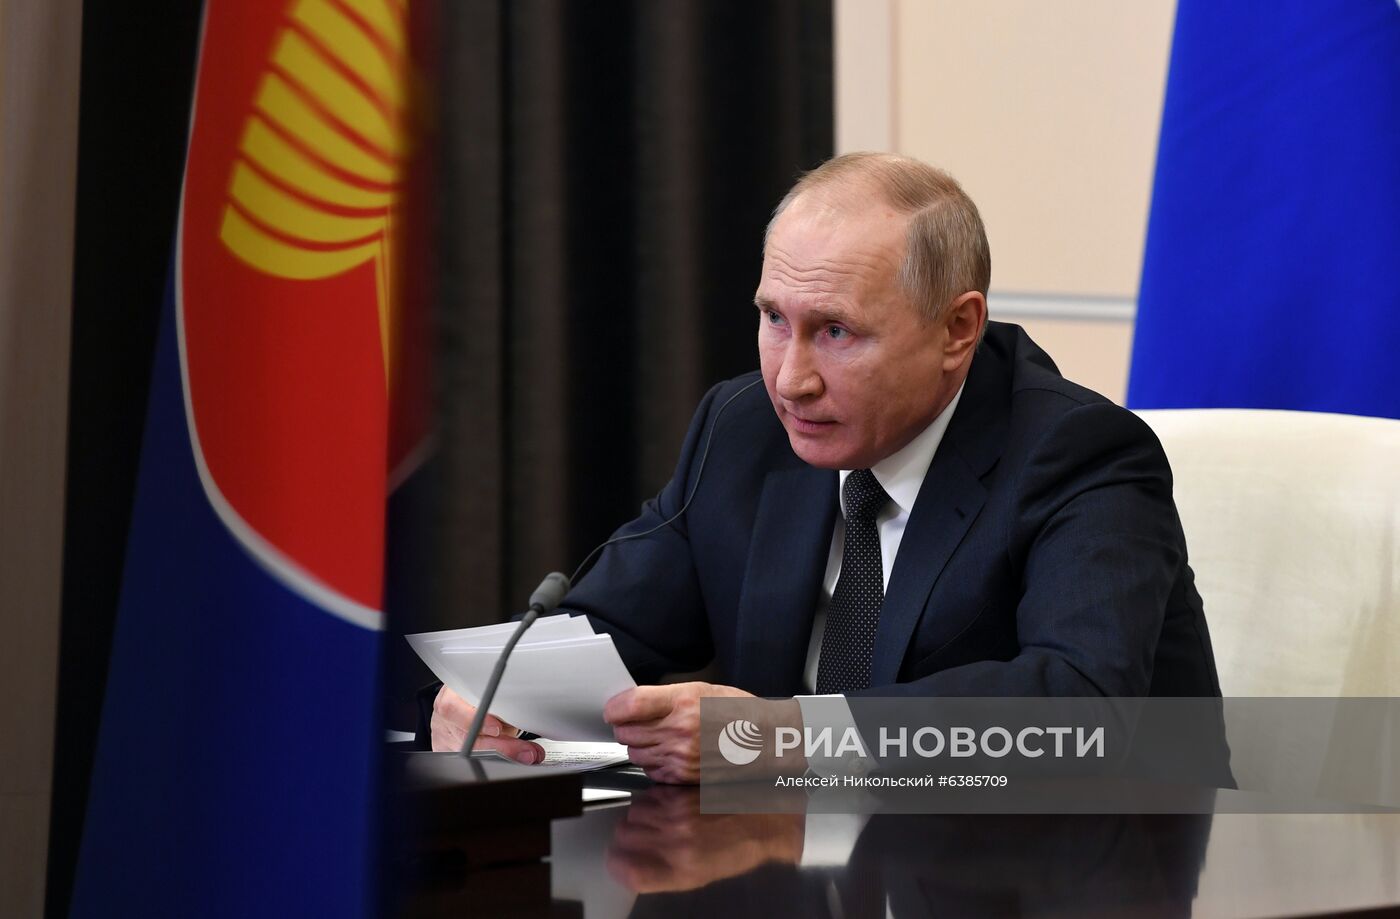 Президент РФ В. Путин принял участие в работе 15-го Восточноазиатского саммита